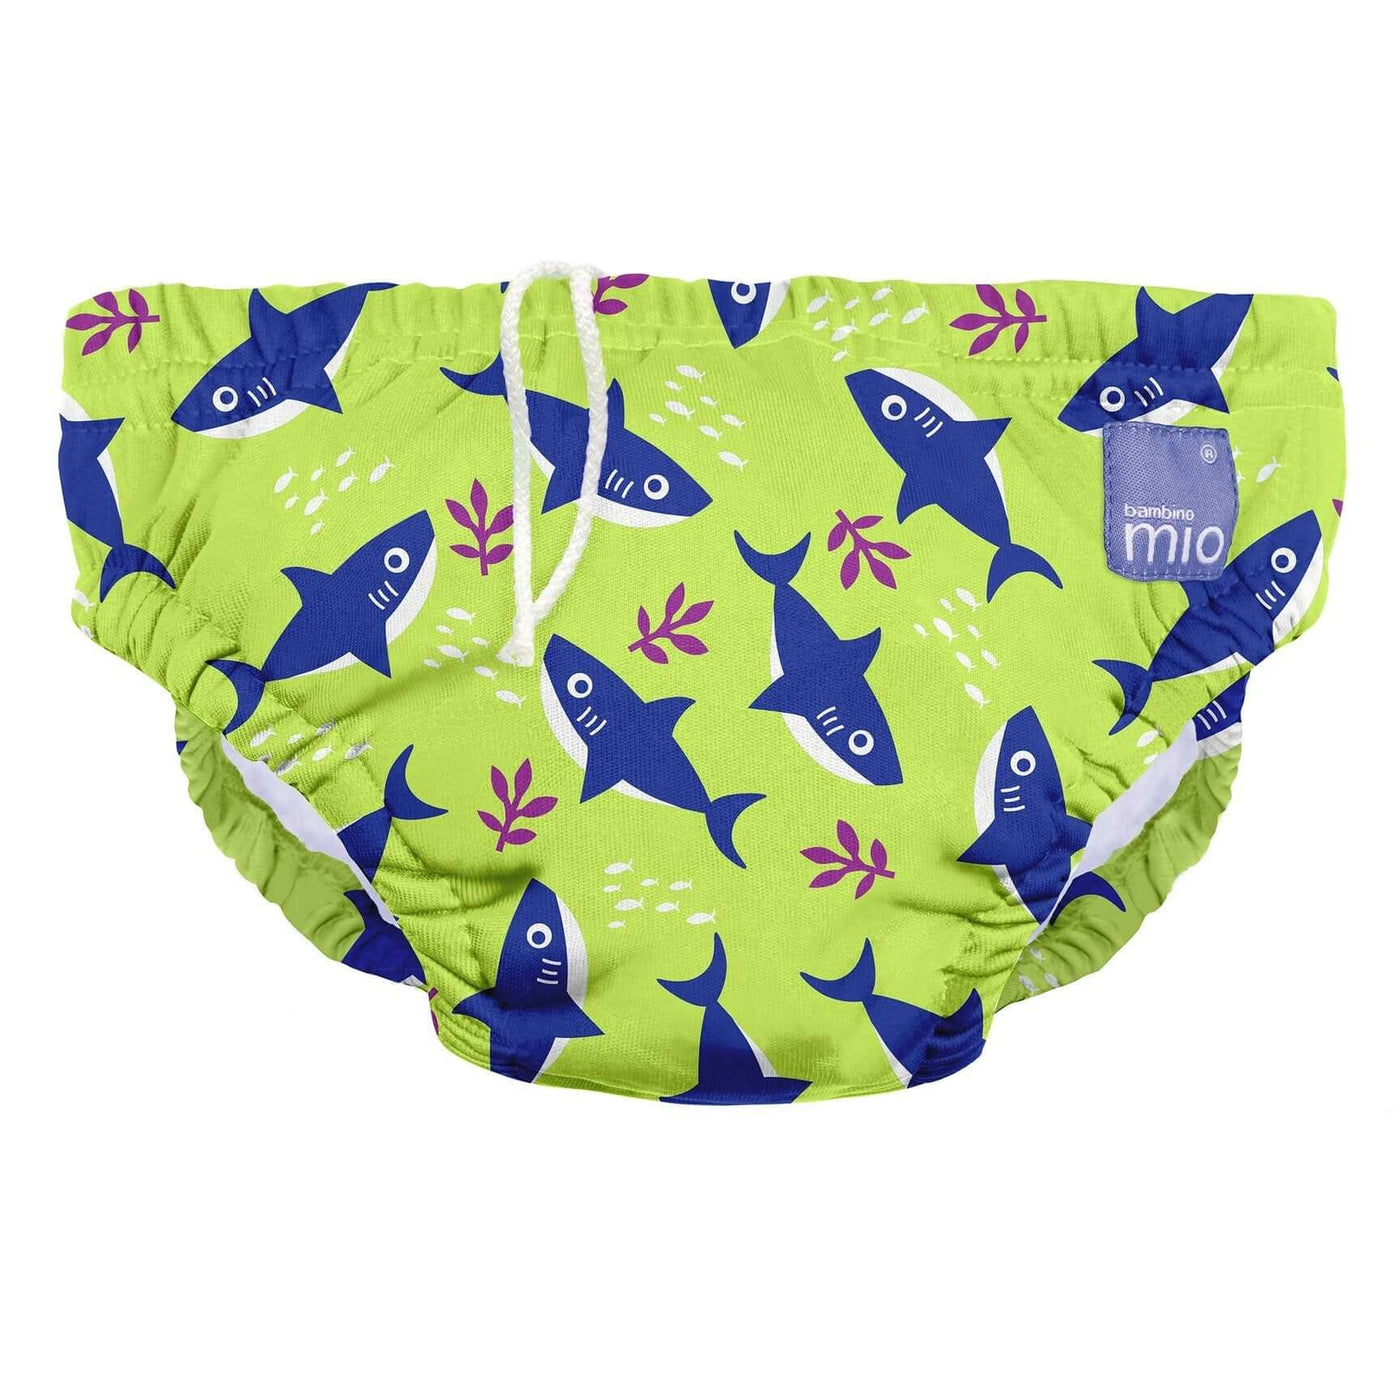 Bambino Mio Nice and Nautical Reusable Swim Nappy Colour: Anchors Away Size: Medium reusable swim nappies Earthlets